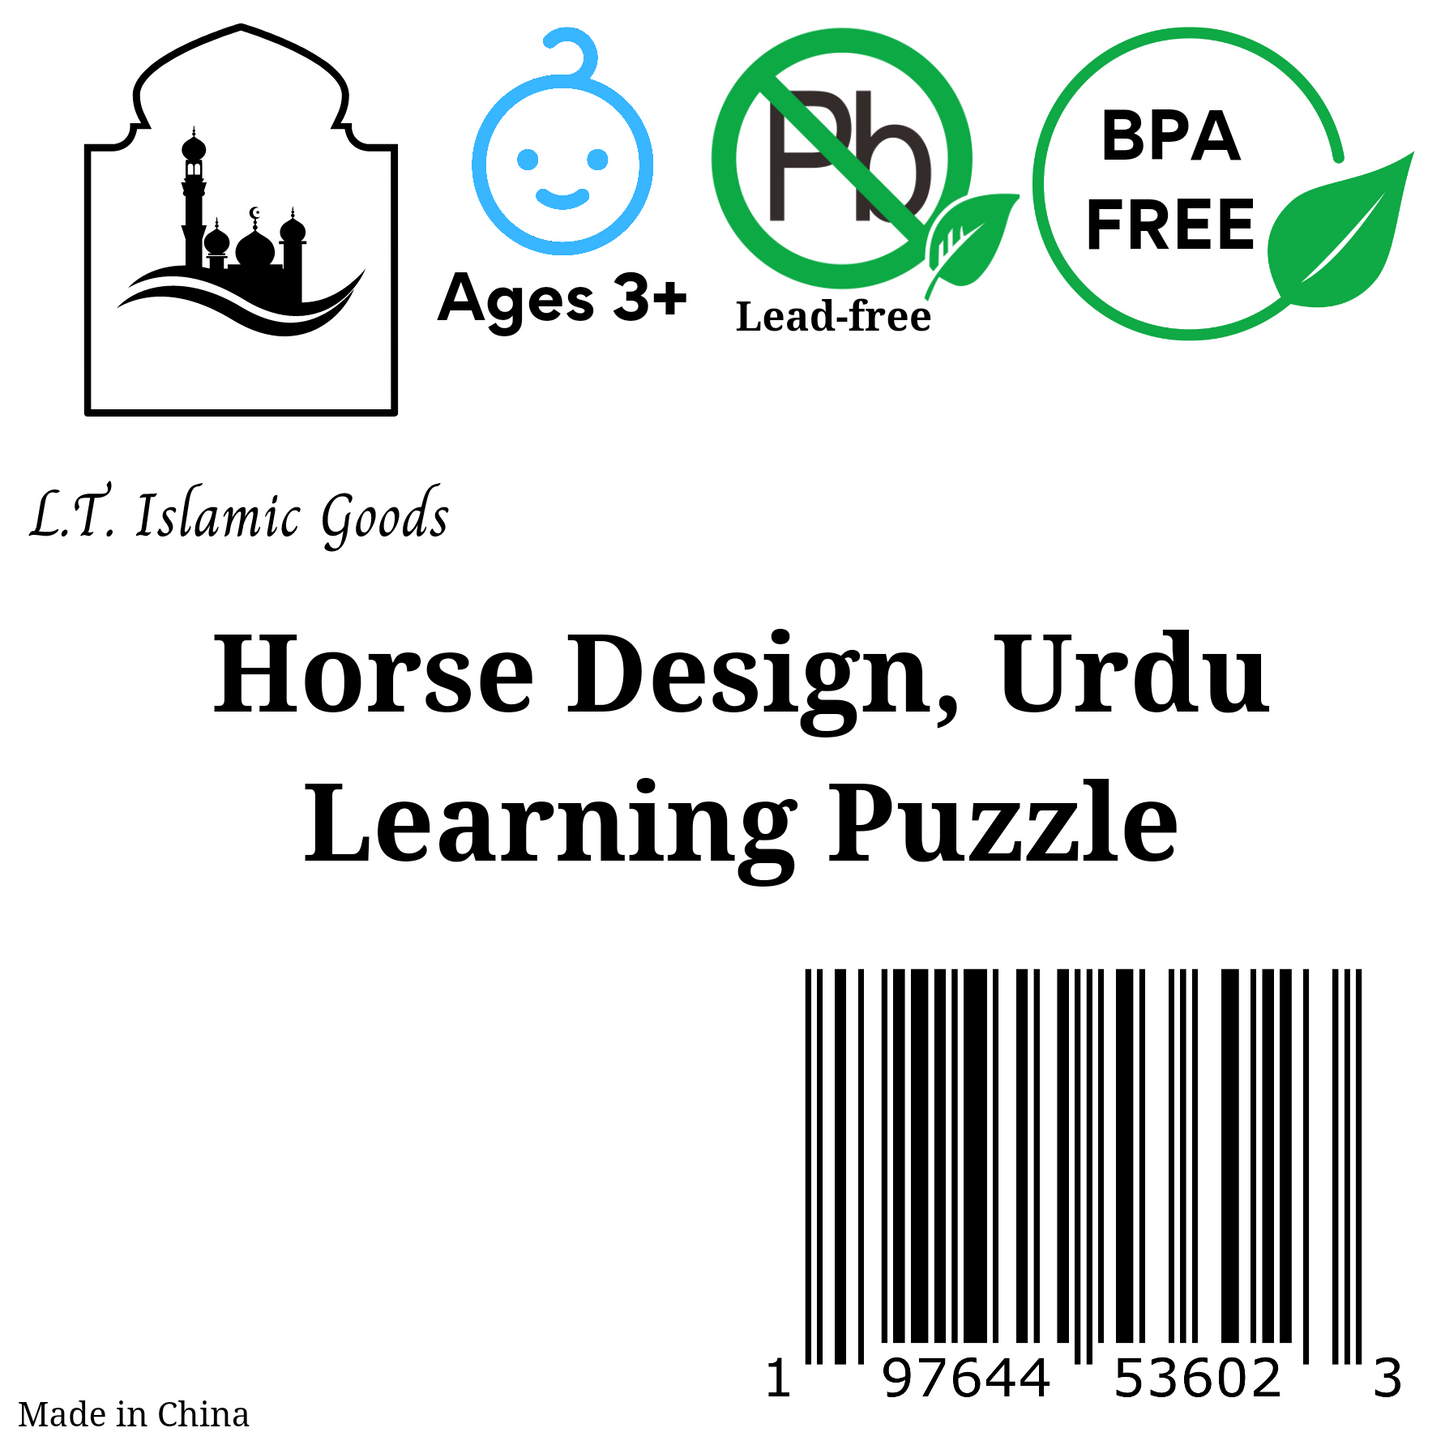 Urdu Learning Puzzle, Horse Design